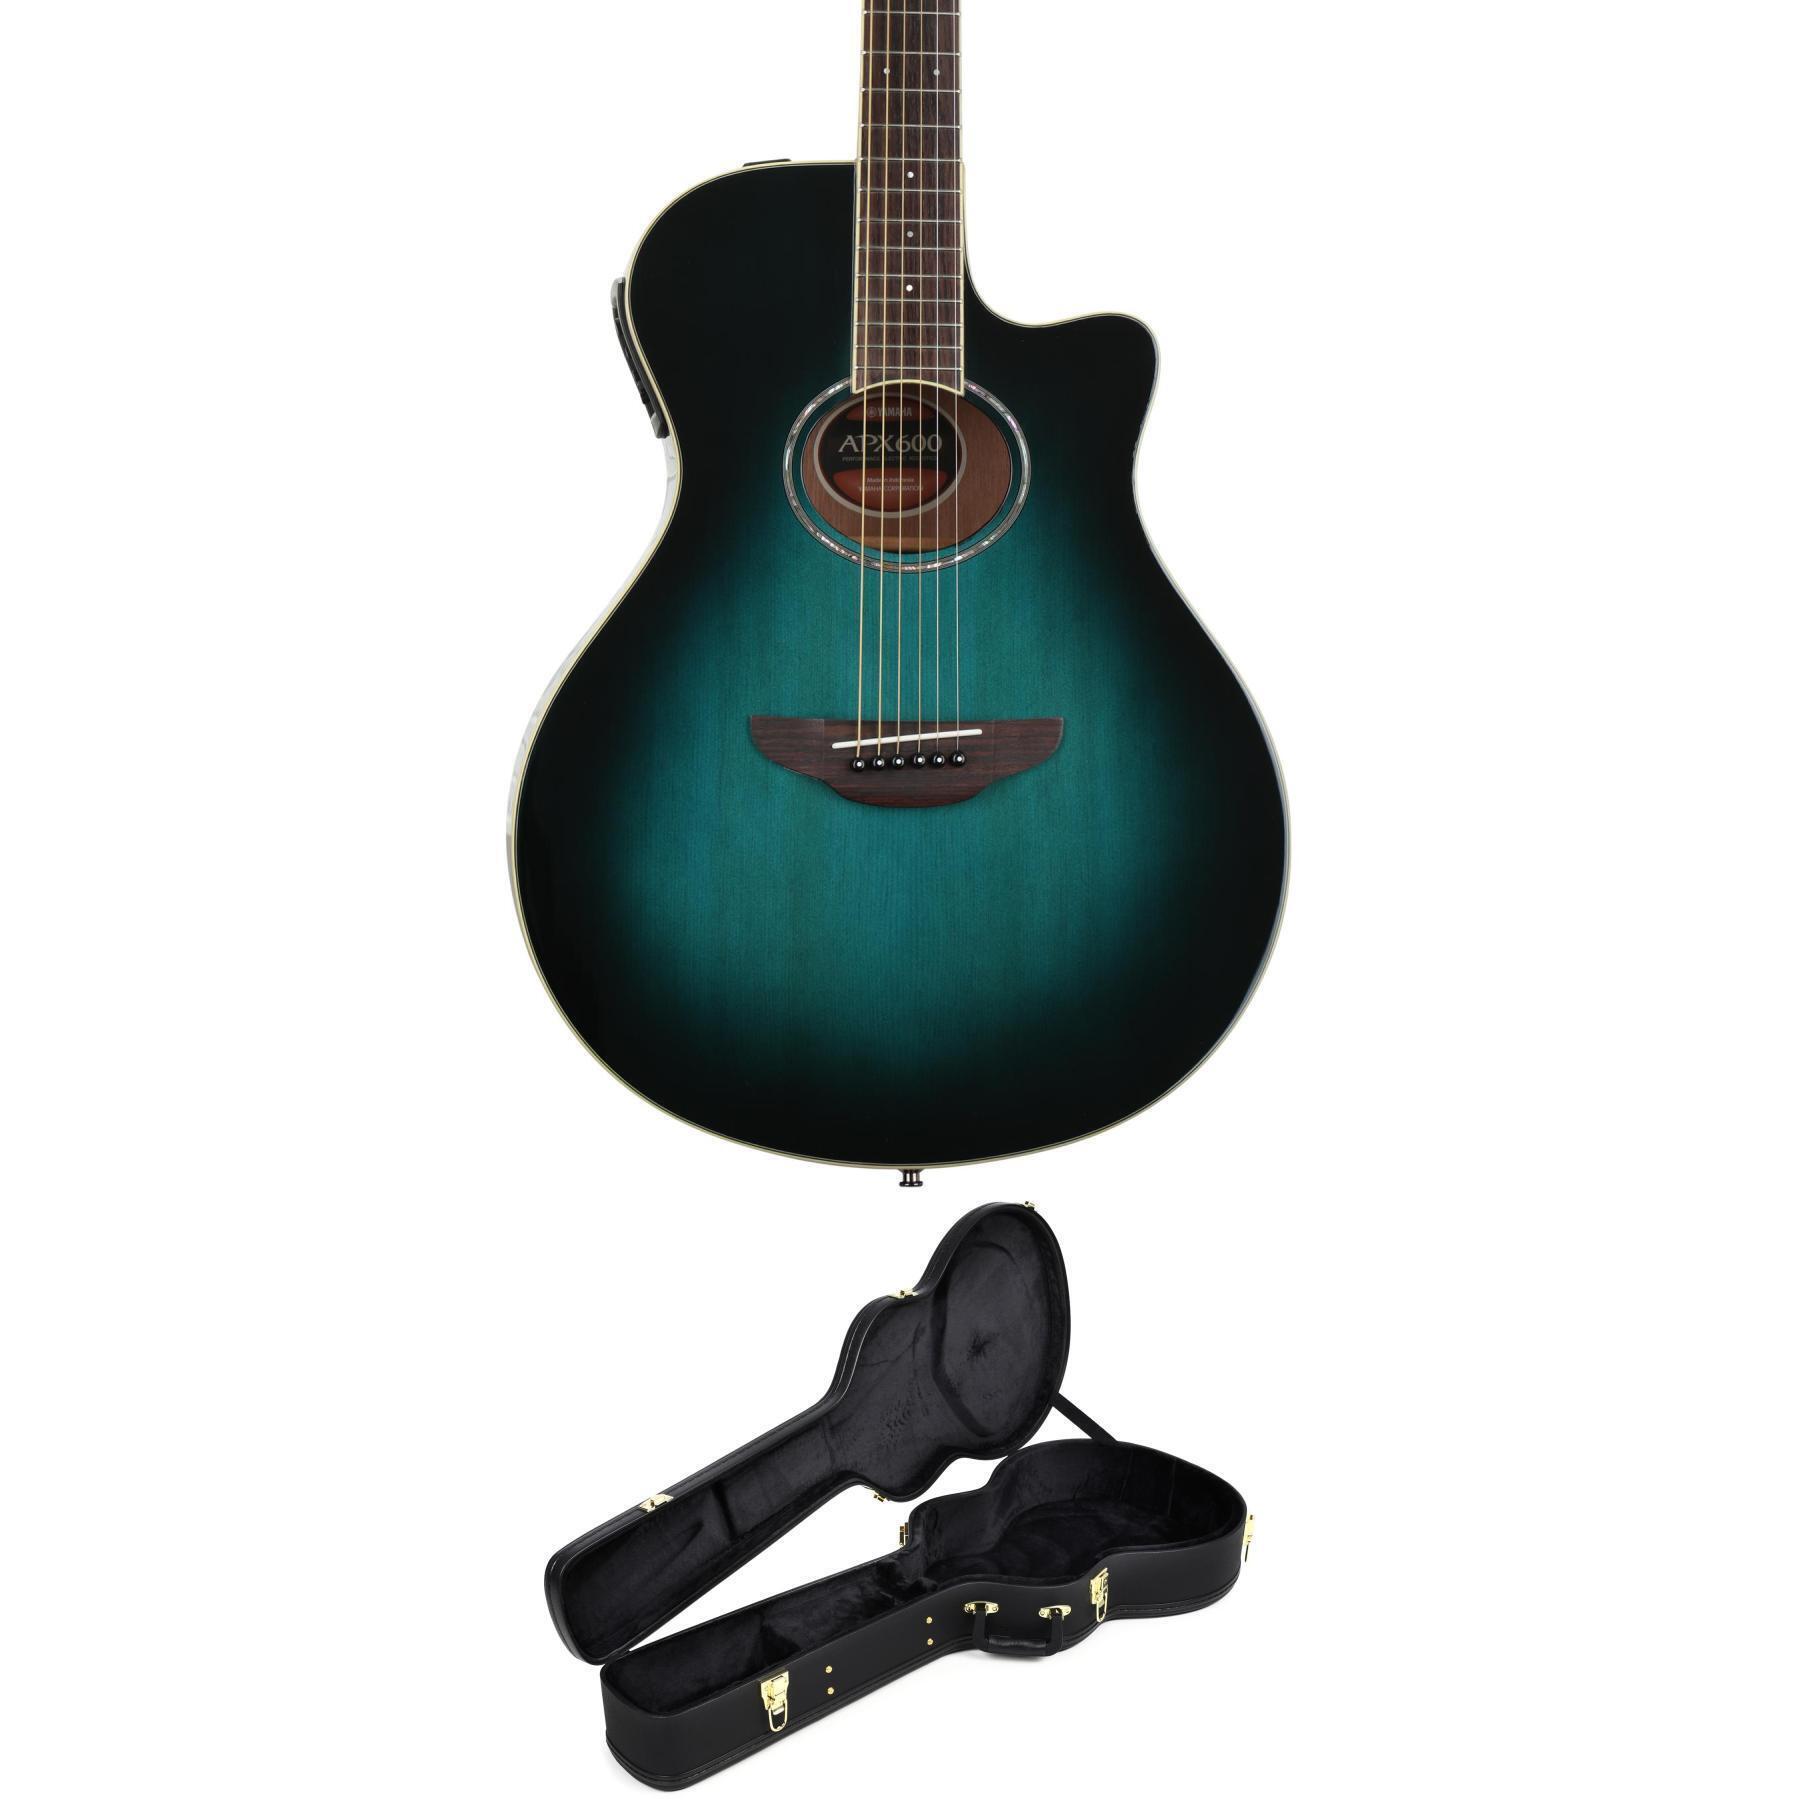 Yamaha APX600 Thinline Acoustic Electric Guitar Blue Burst - Town Center  Music